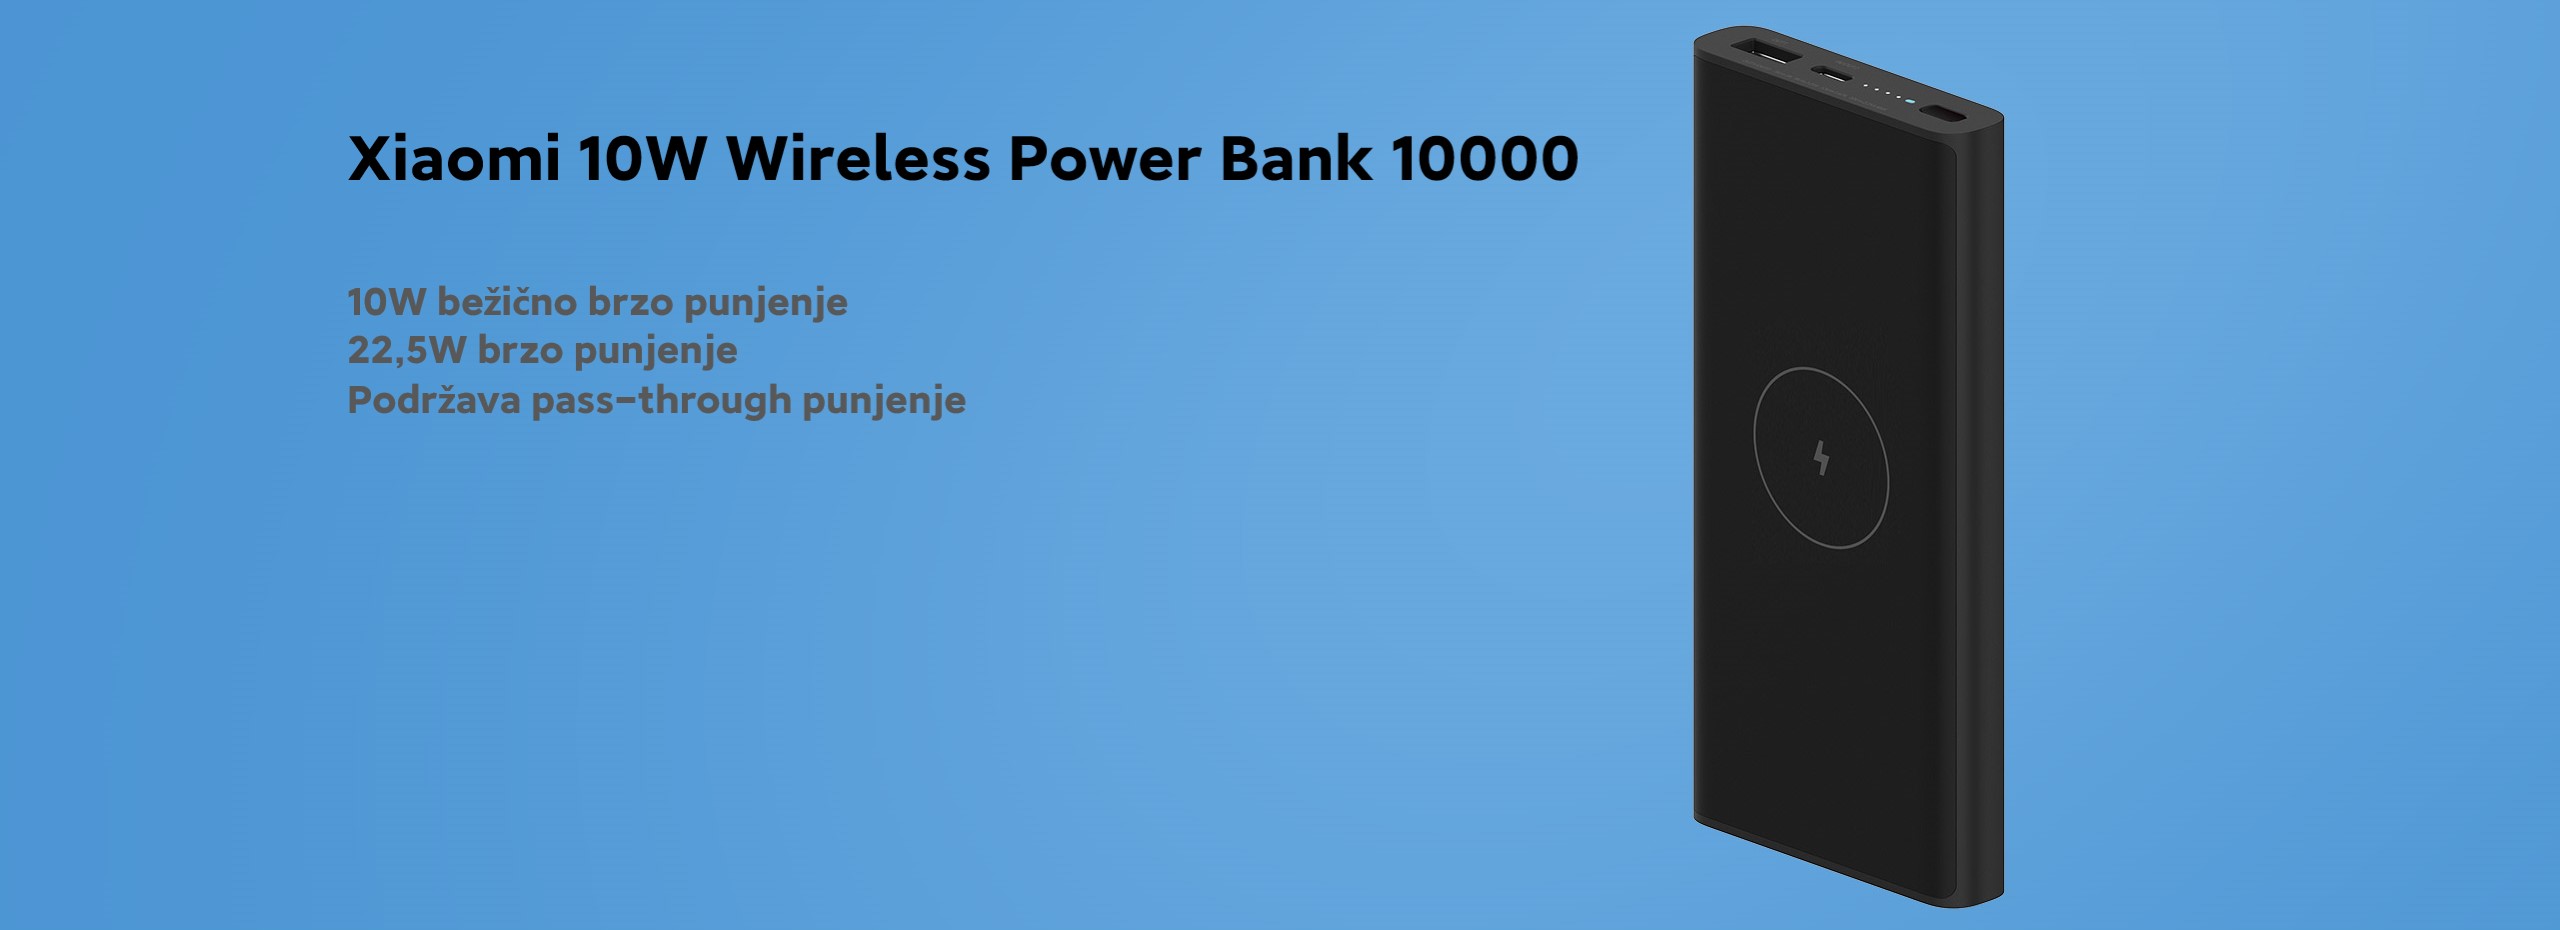 Cargador Inalambrico Xiaomi 10w Wireless Powerbank 10000mah - ICBC